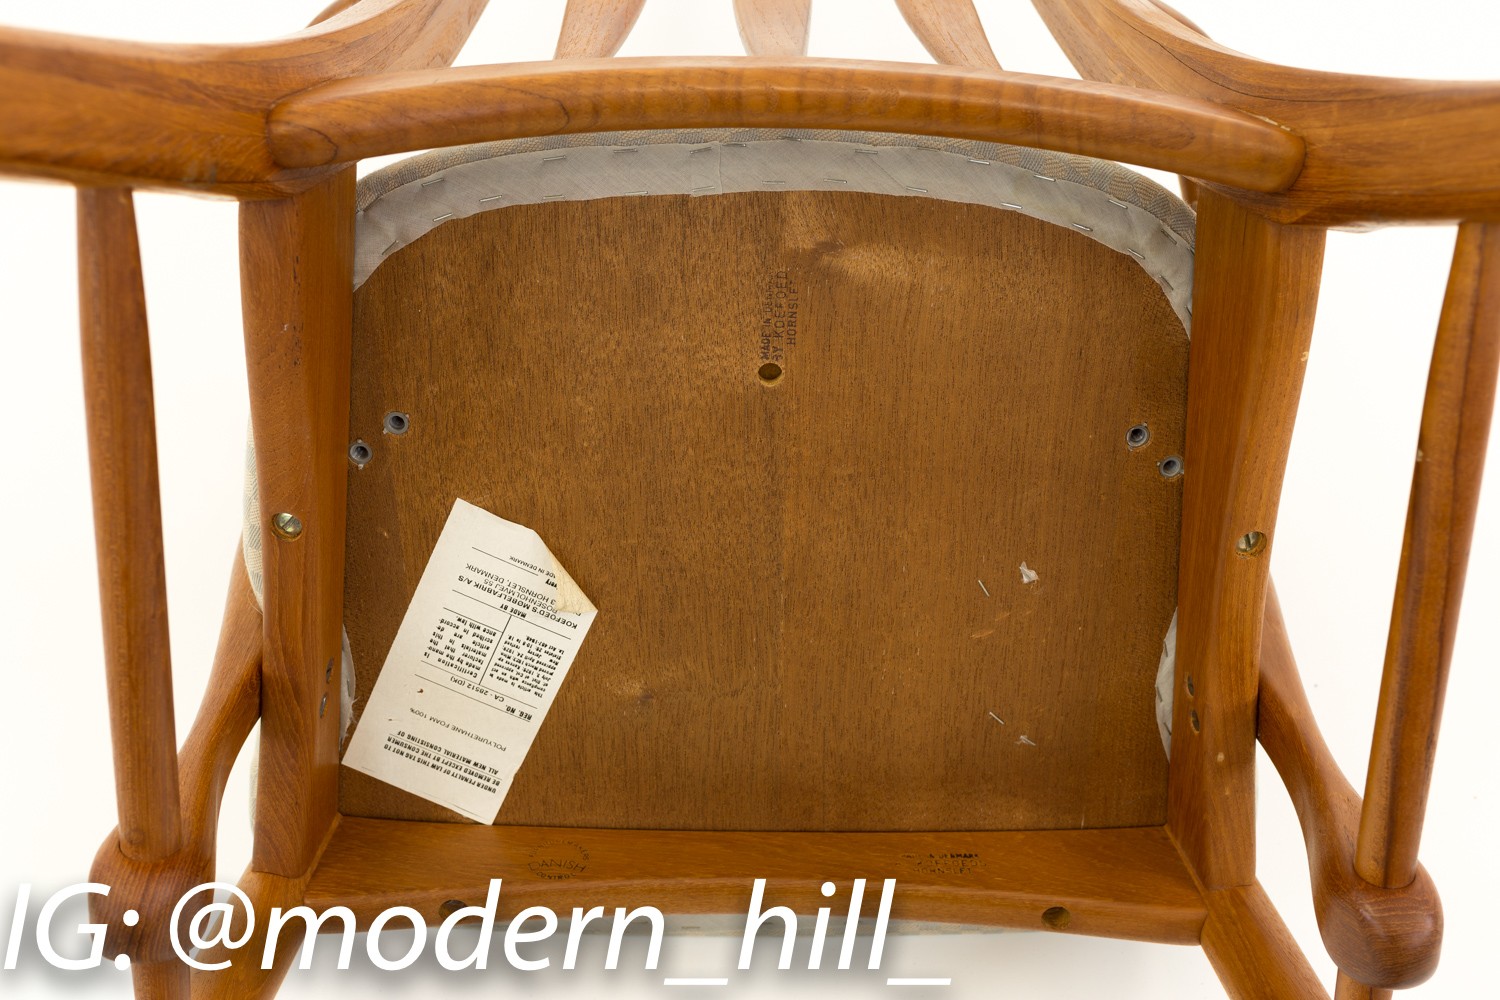 Niels Koefoed Hornslet Danish Teak Eva Mid Century Modern Dining Chairs - Set of 6